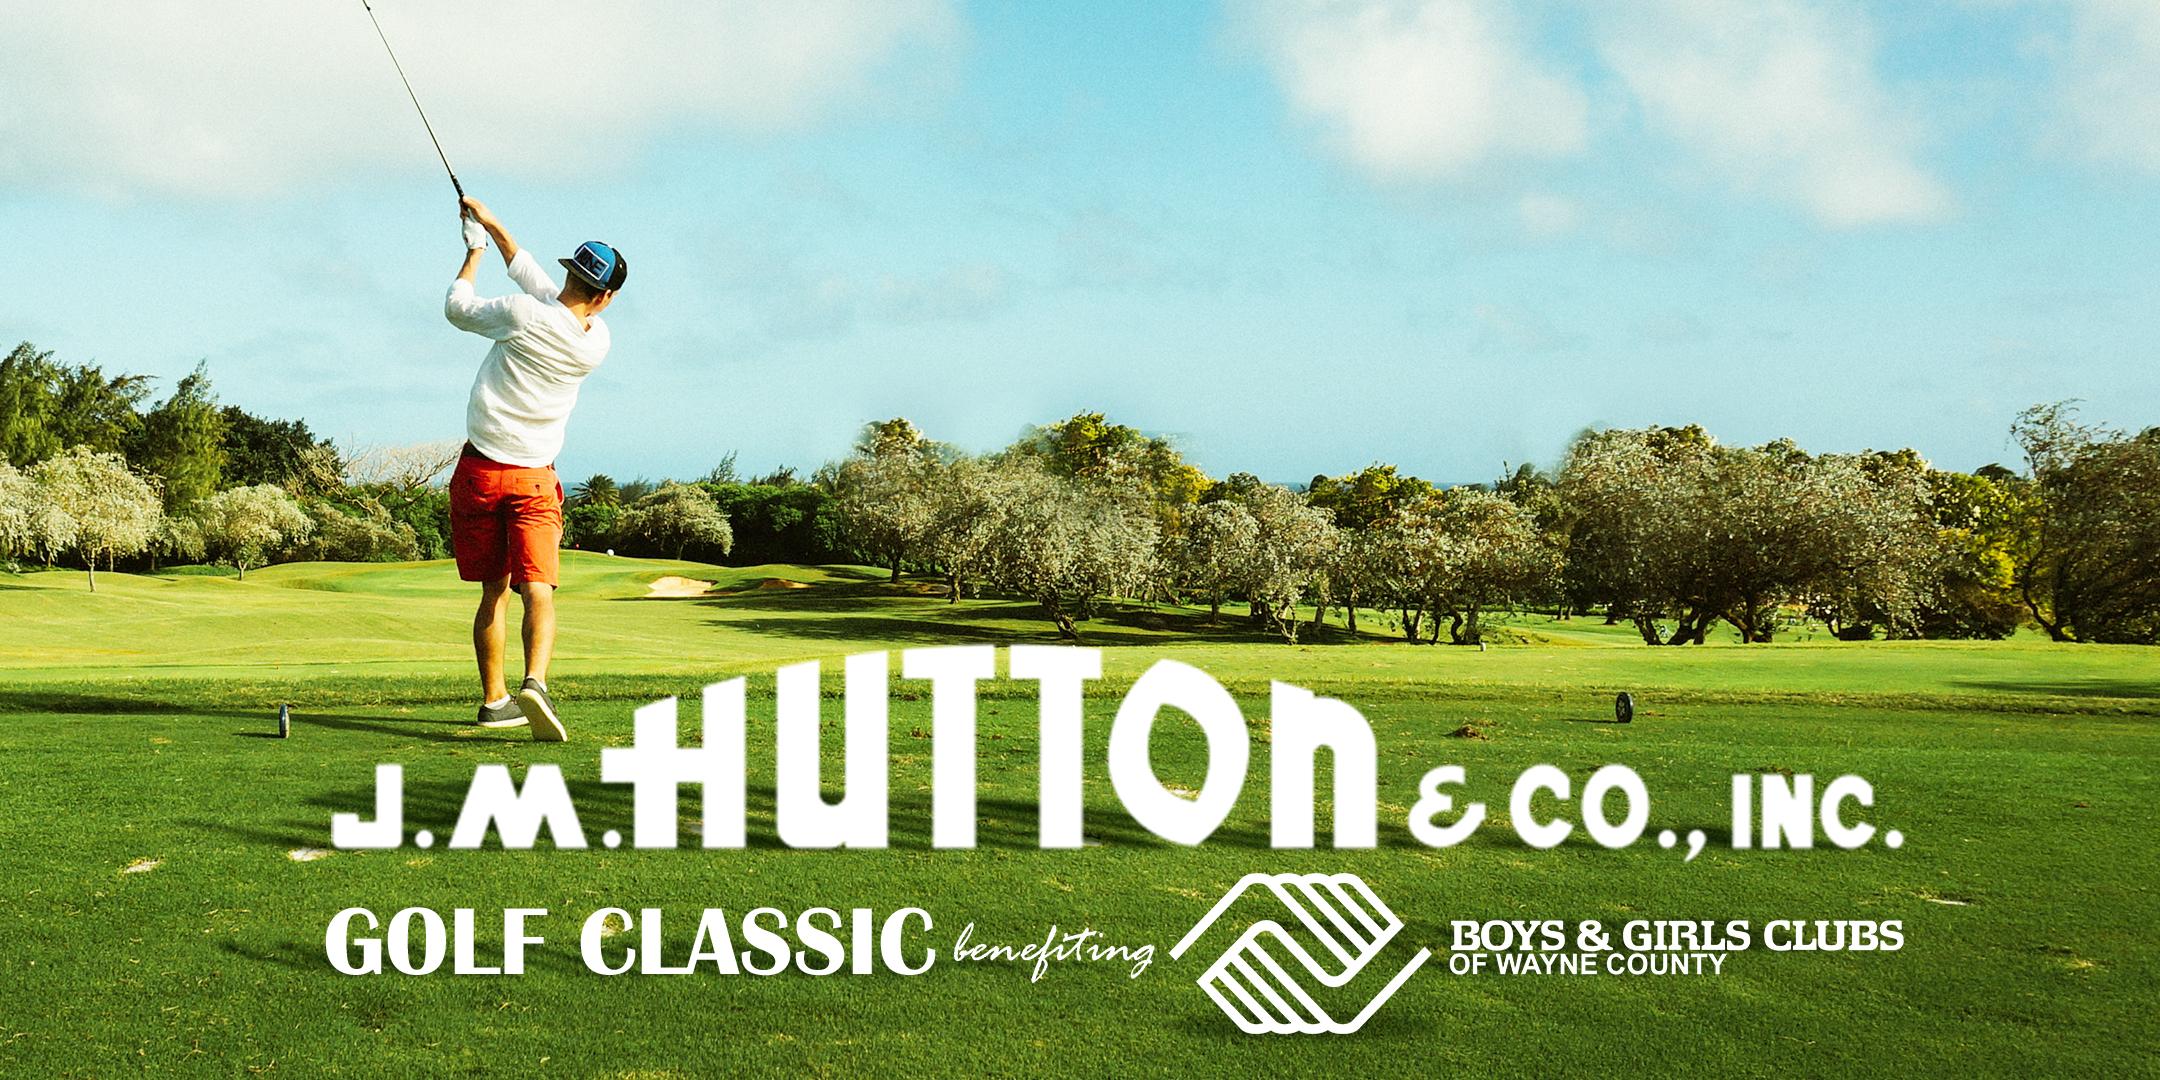 J.M. Hutton Golf Classic benefiting Boys & Girls Clubs of Wayne County